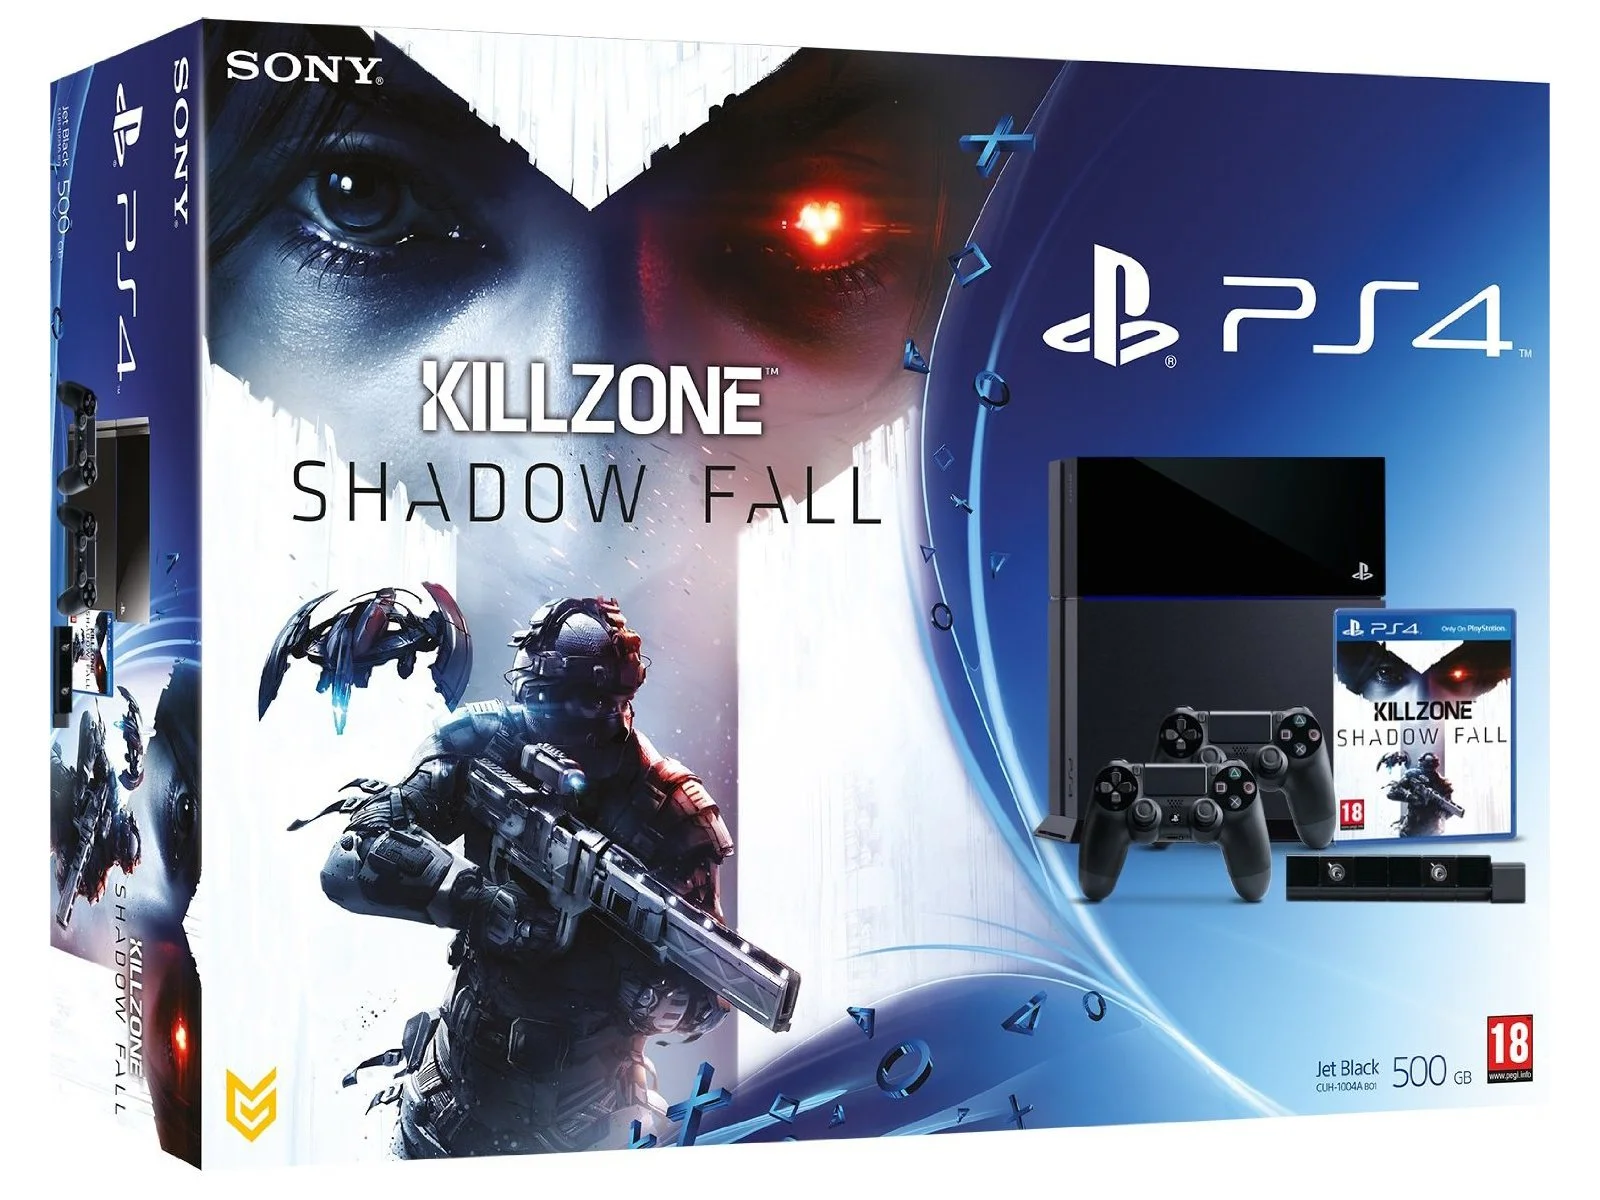 Killzone: Shadow Fall PS4 бандл замечен на Amazon за 499 Евро - фото 1